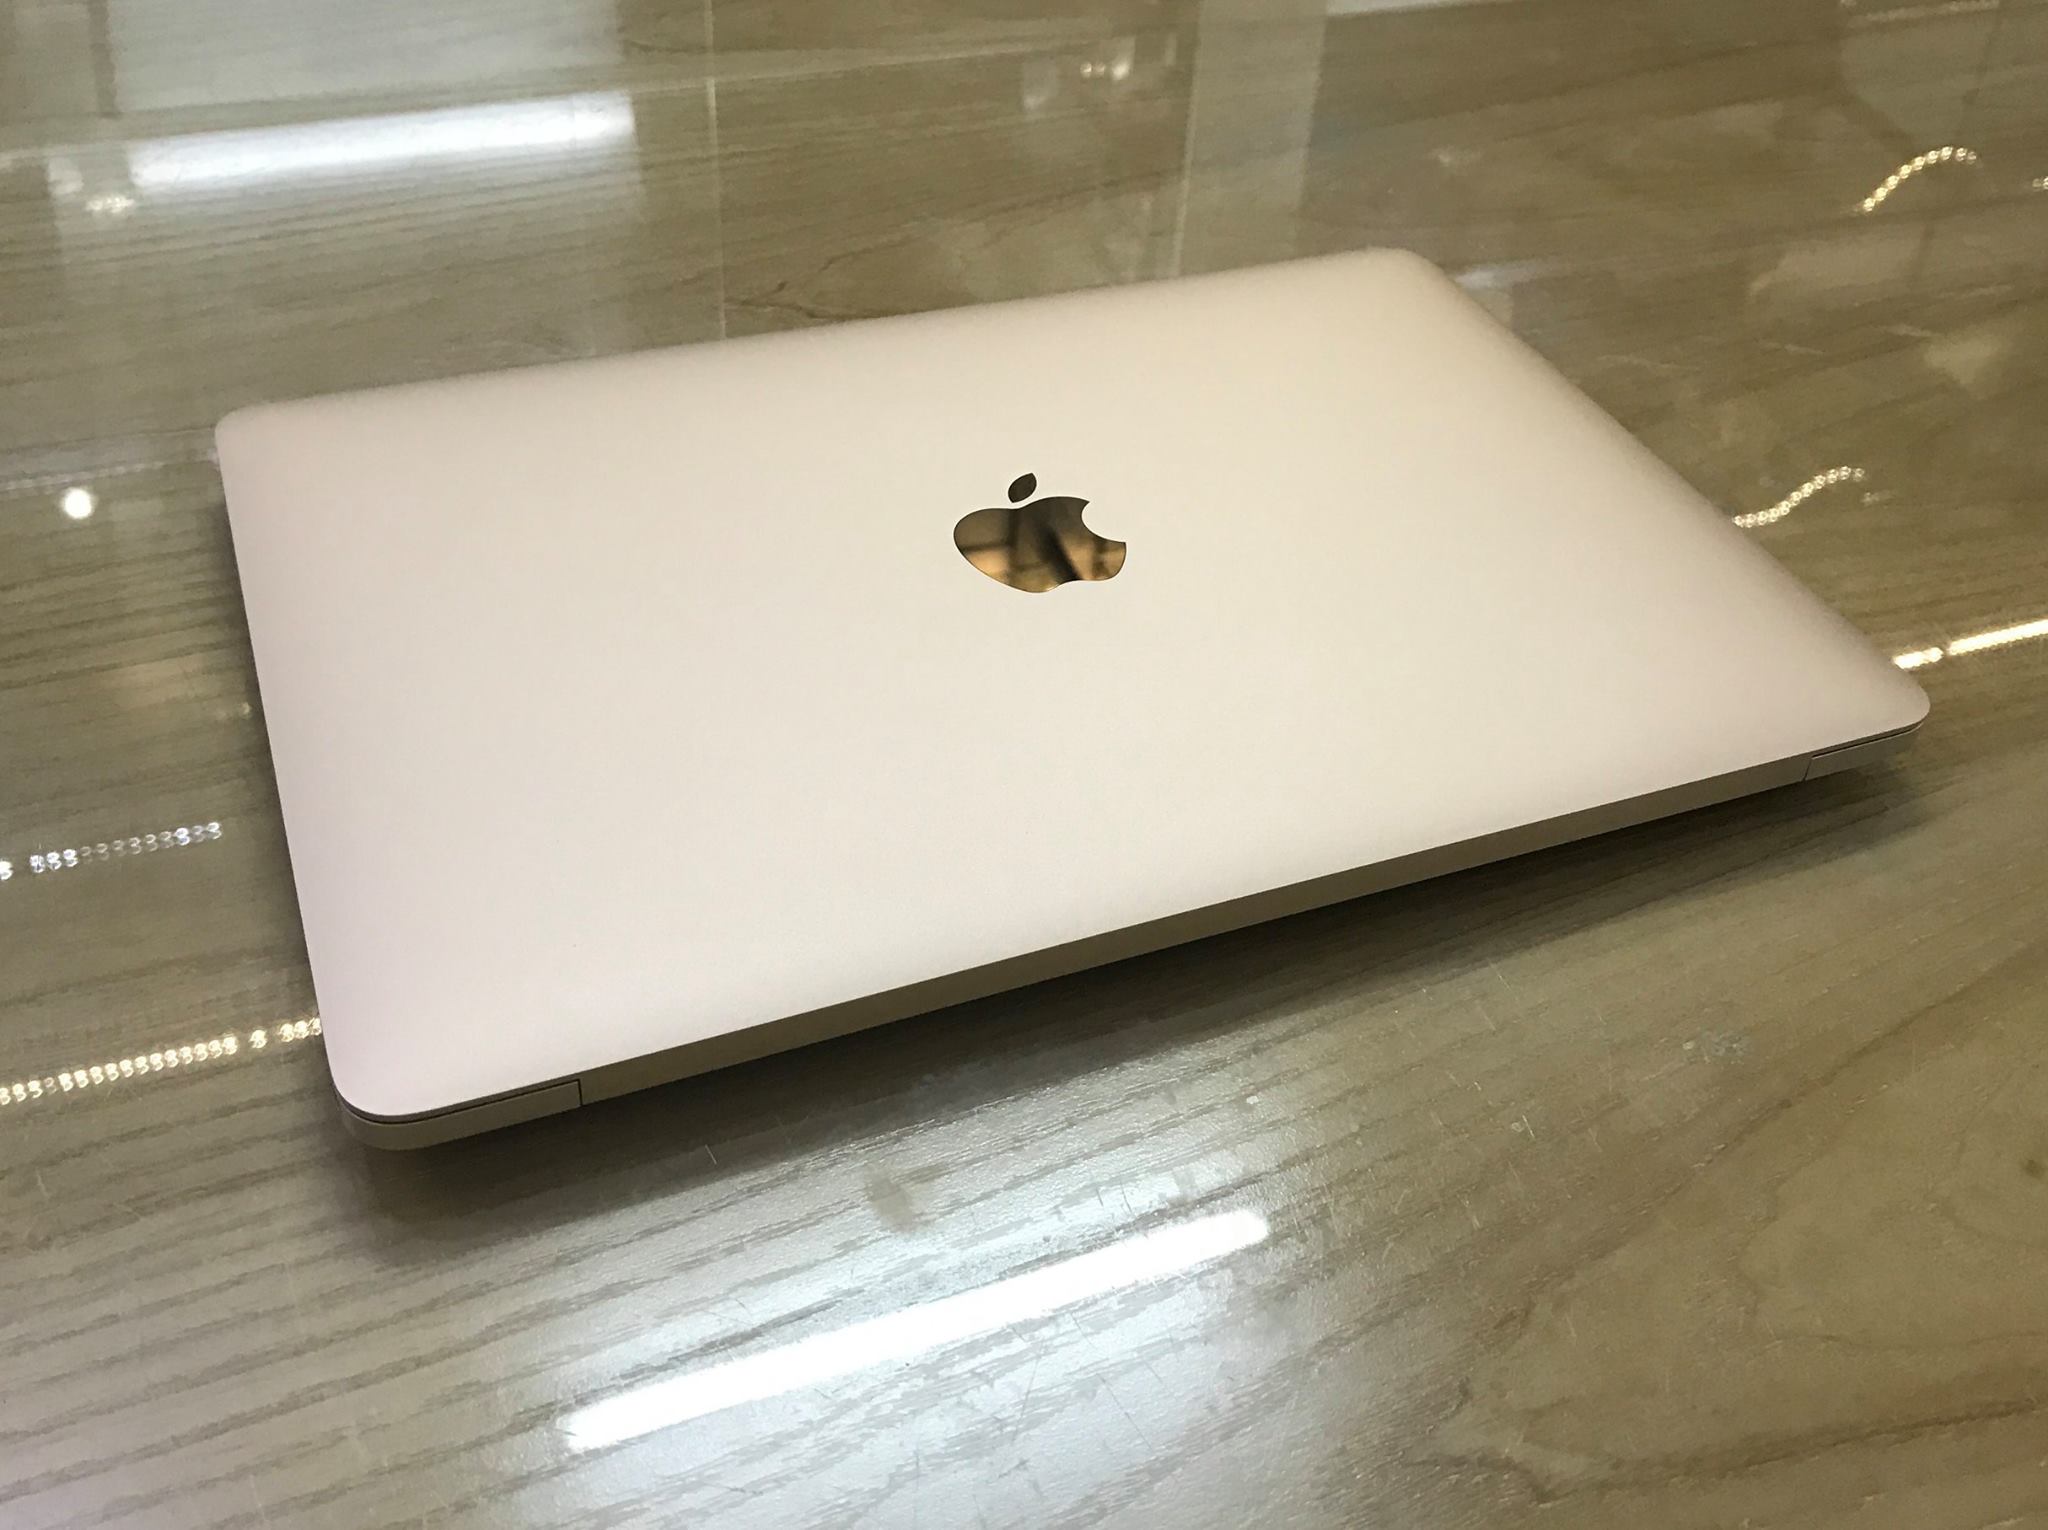 The New Macbook 1.2GHz 512GB-4.jpg